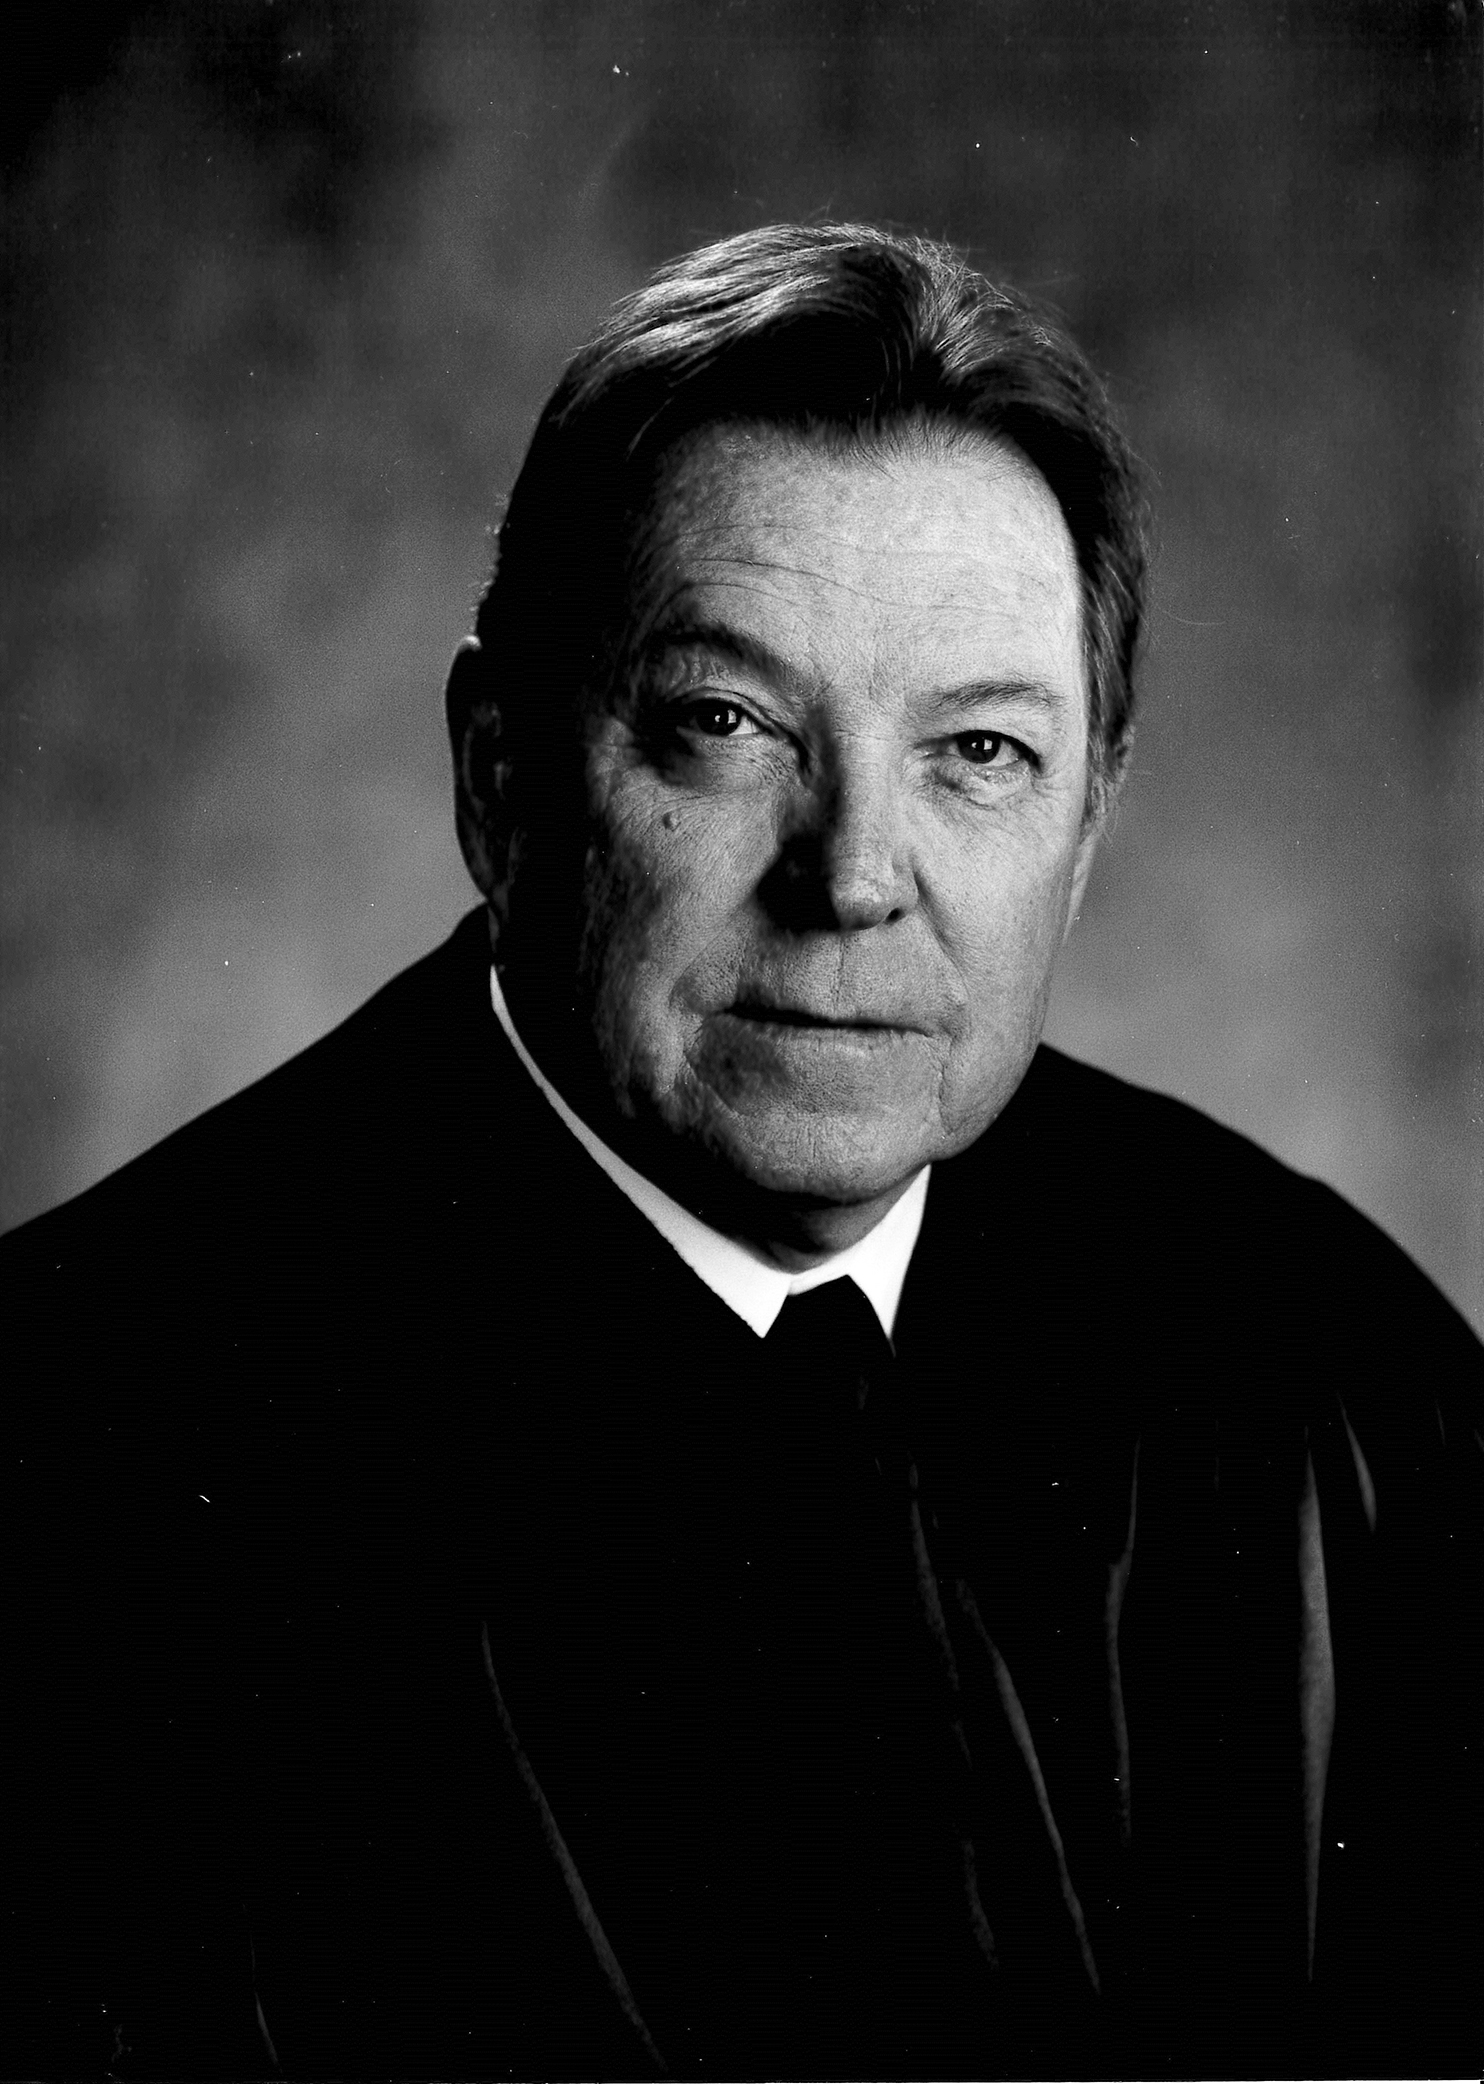 Associate Justice Jack Crozier Watson